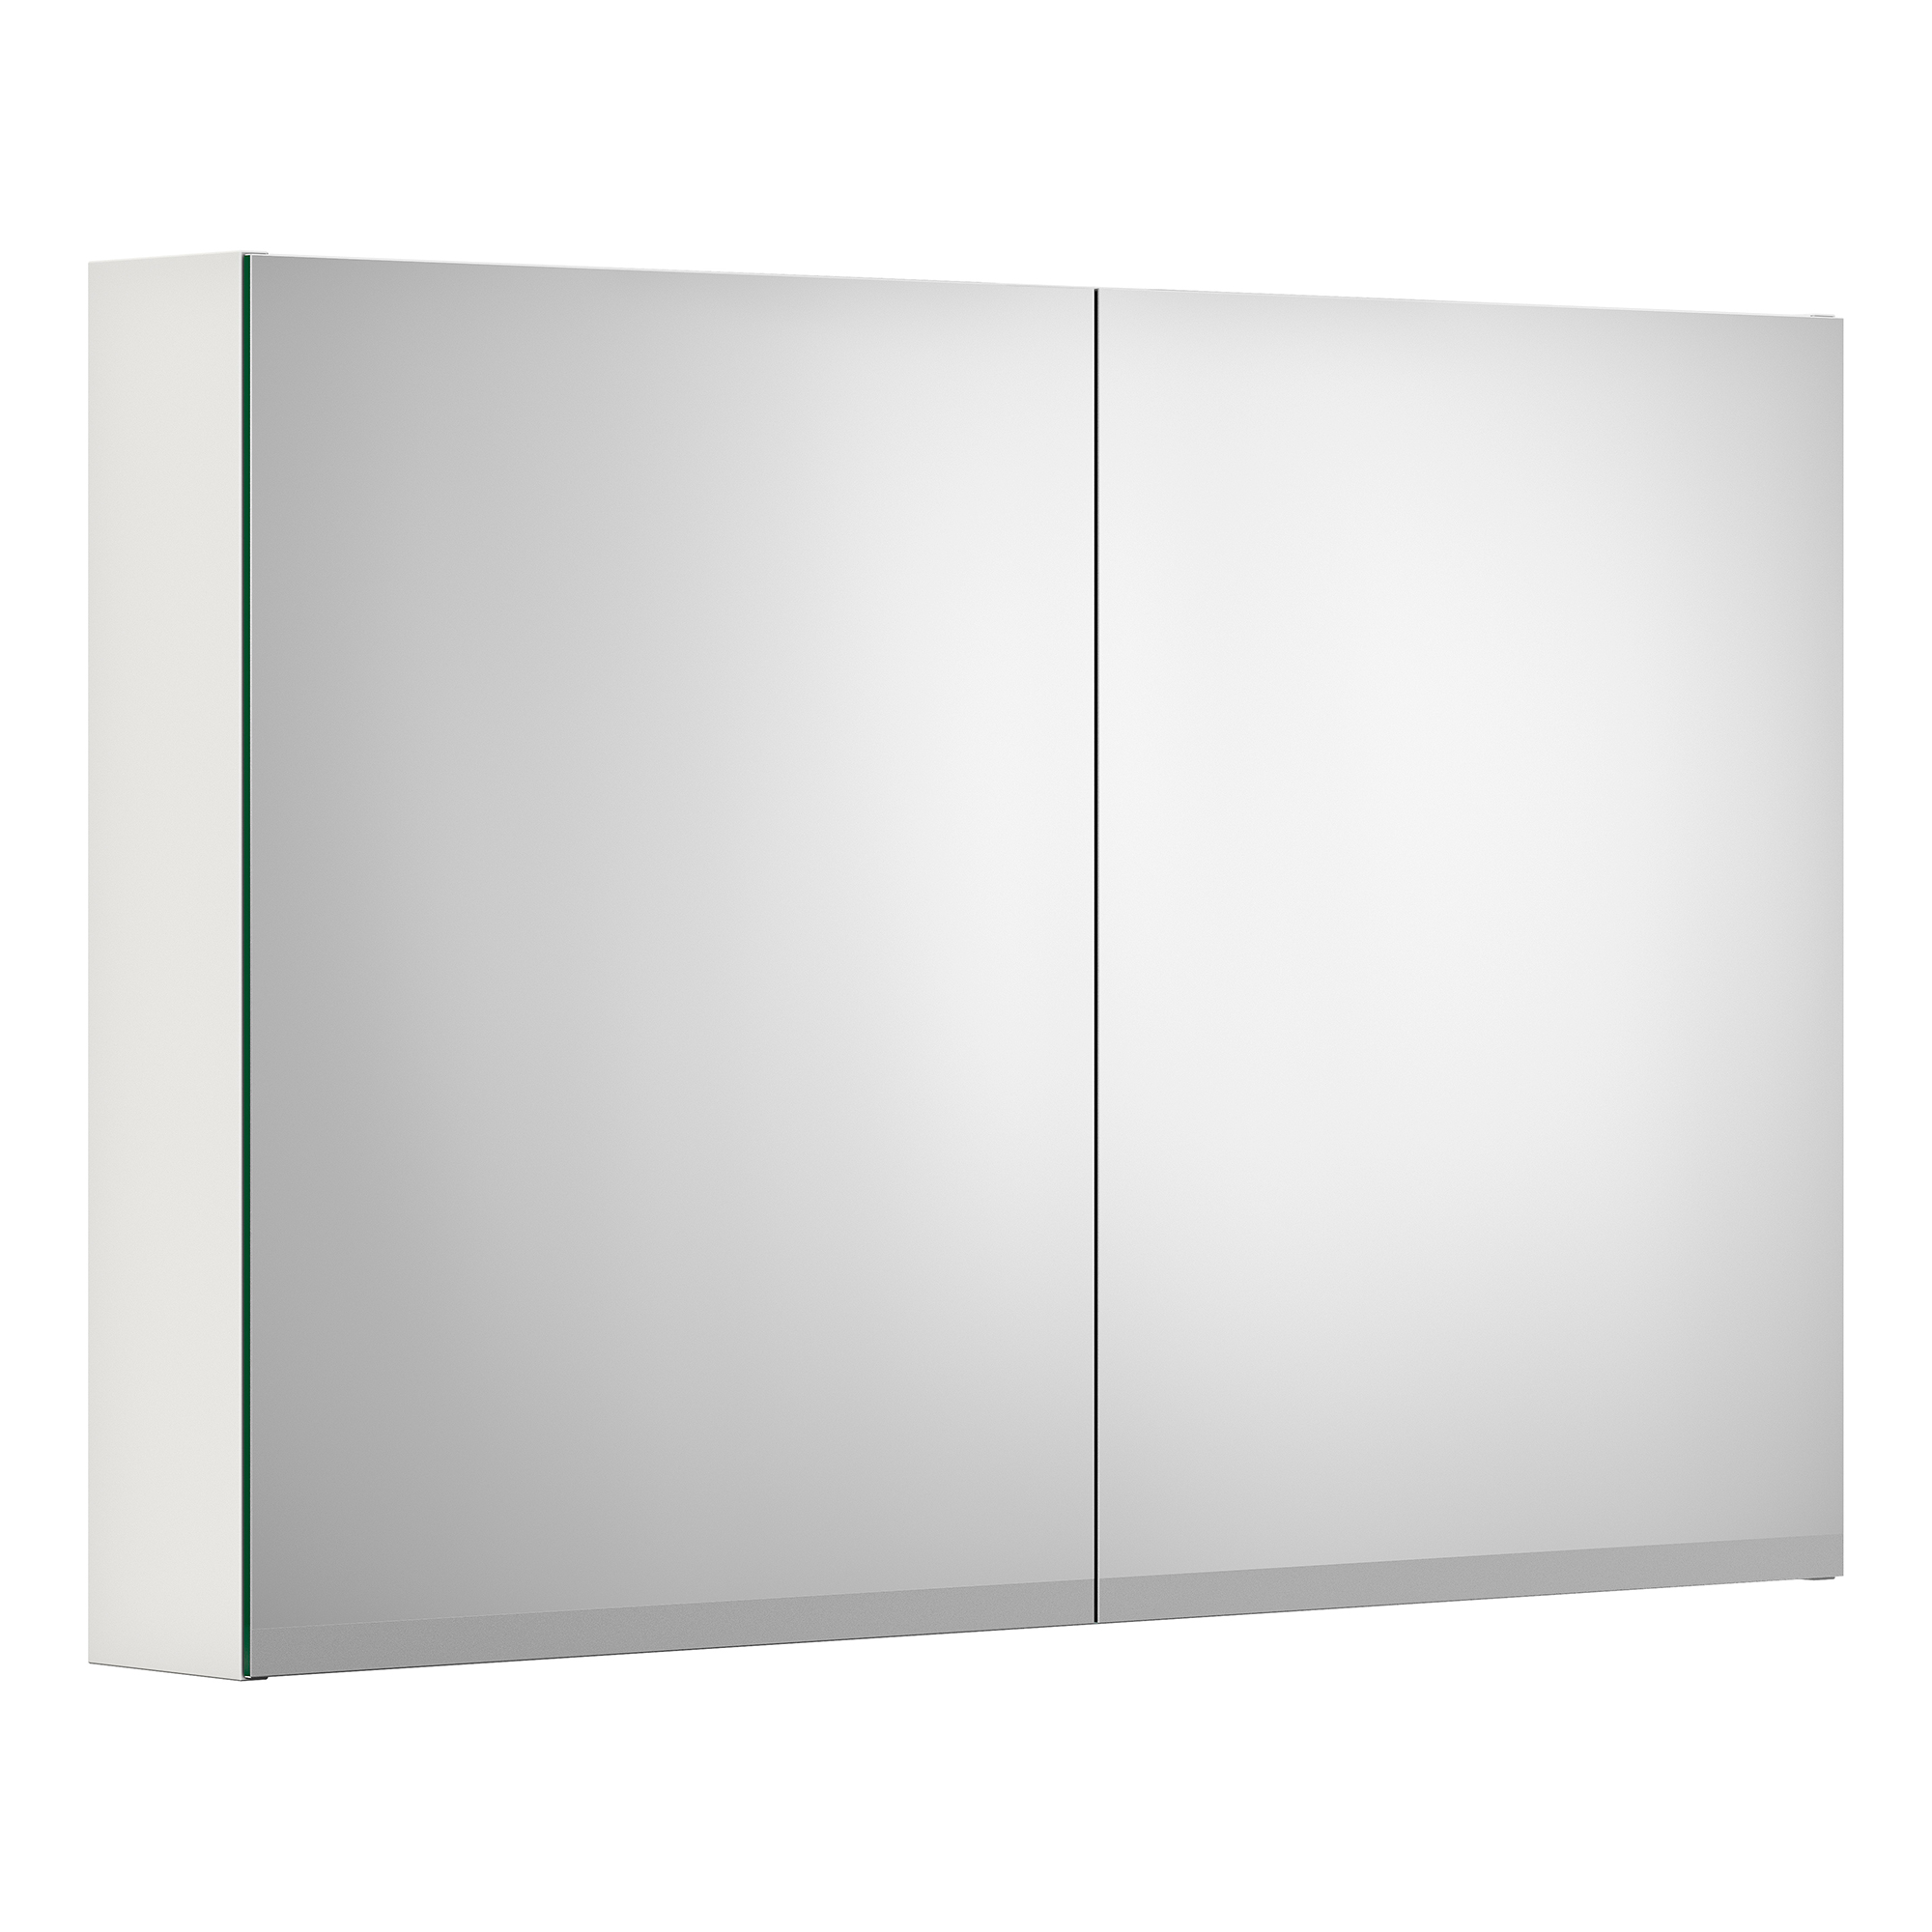 Spegelskåp Gustavsberg Artic 100 cm med LED belysning Undertill